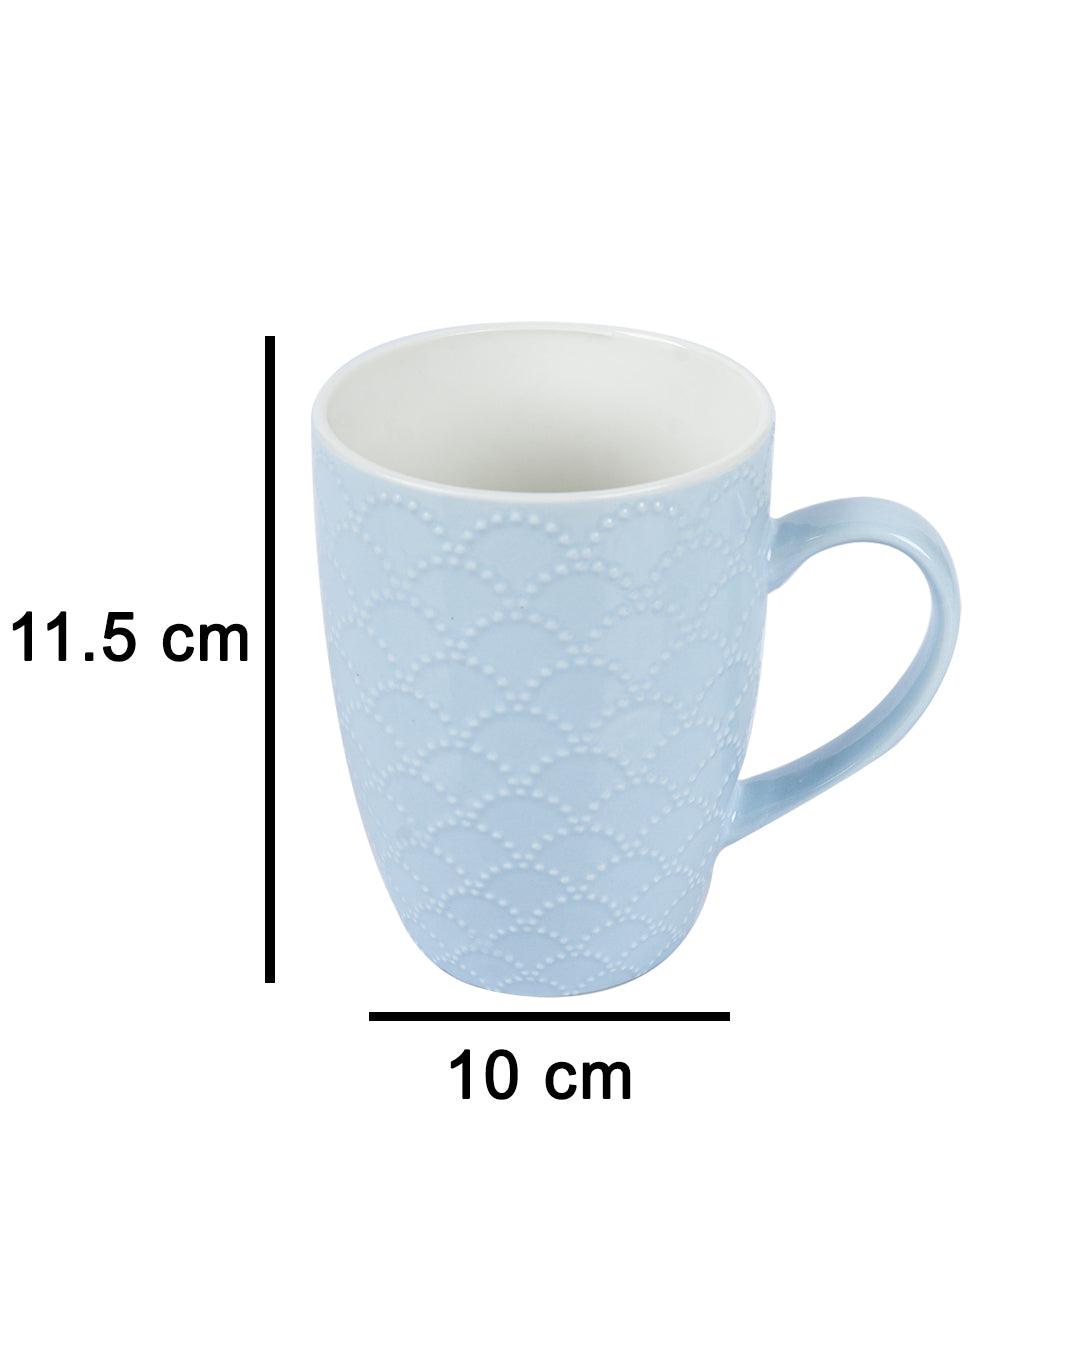 Ceramic Coffee Mug 330 mL (Light Blue & Blue) - MARKET 99